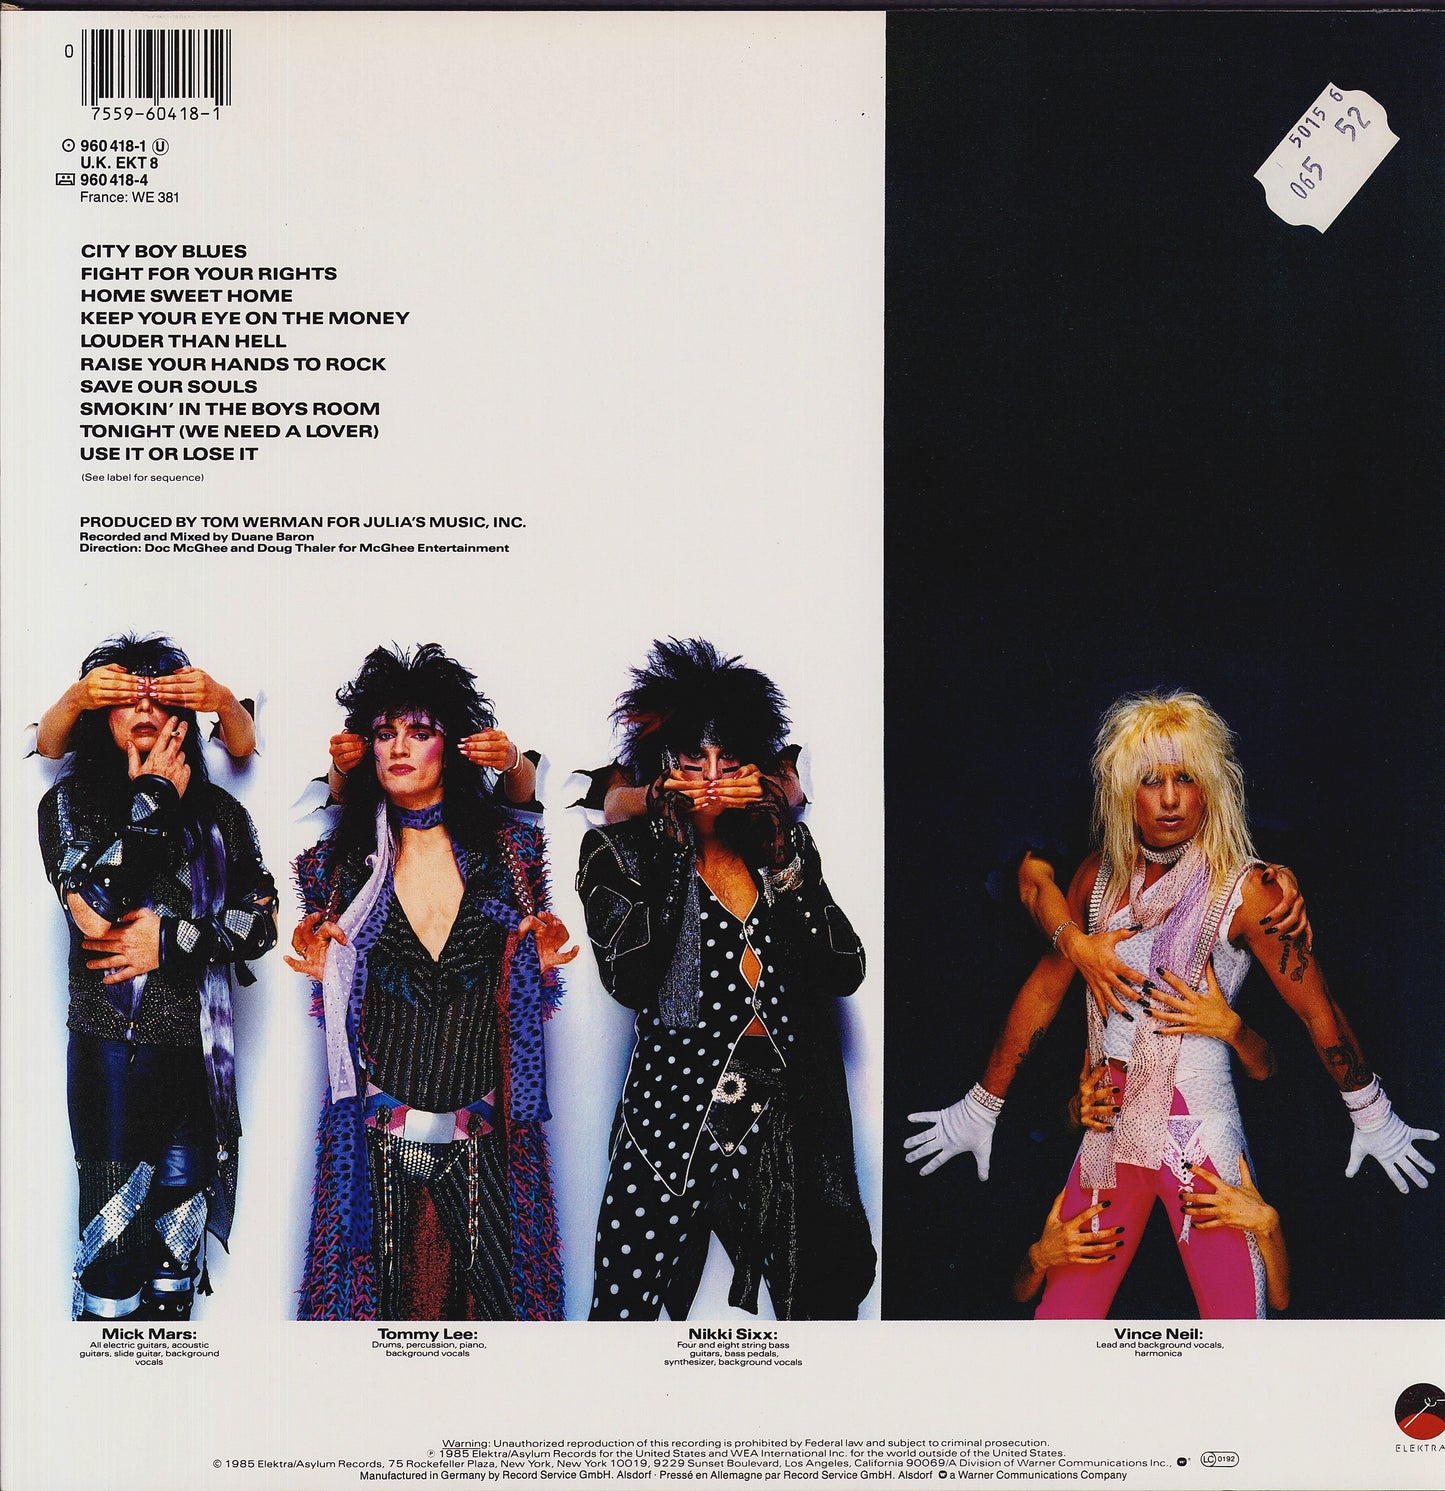 Mötley Crüe ‎- Theatre Of Pain Vinyl LP